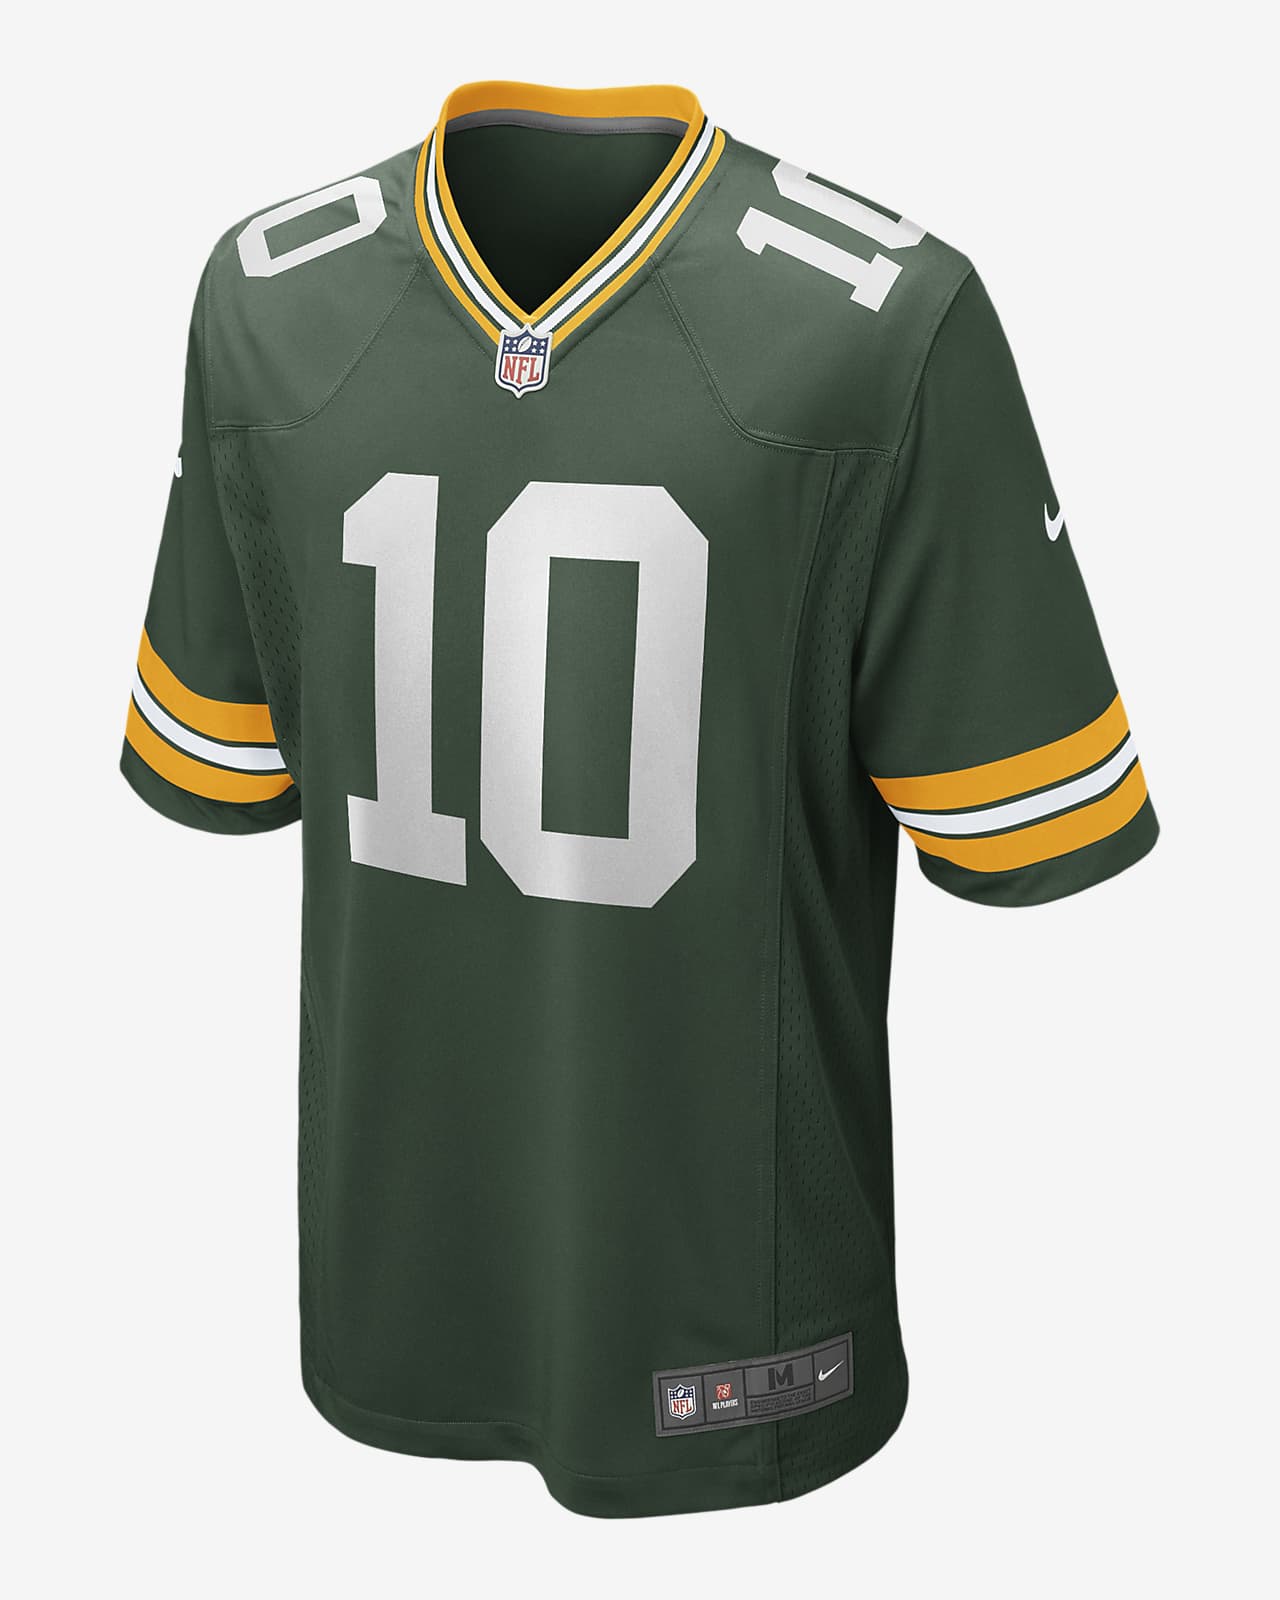 NFL Green Bay Packers (Jordan Love) Men's Game Jersey.